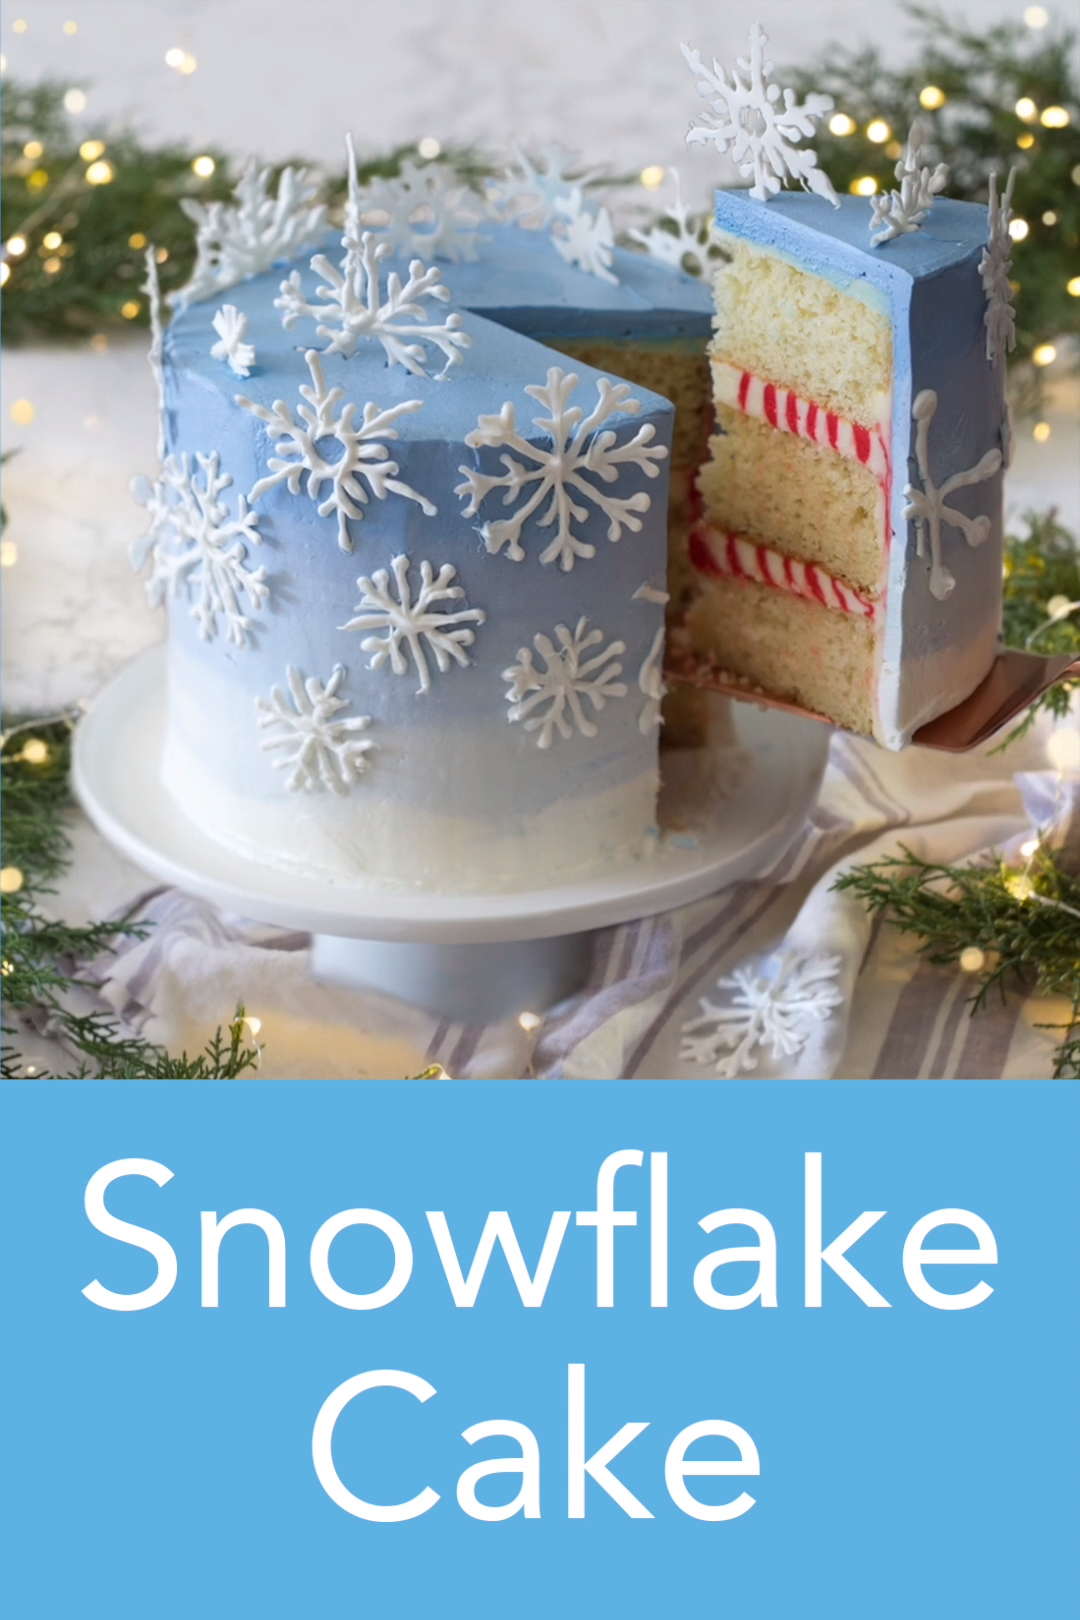 Snowflake Cake -   15 cake Art fun ideas